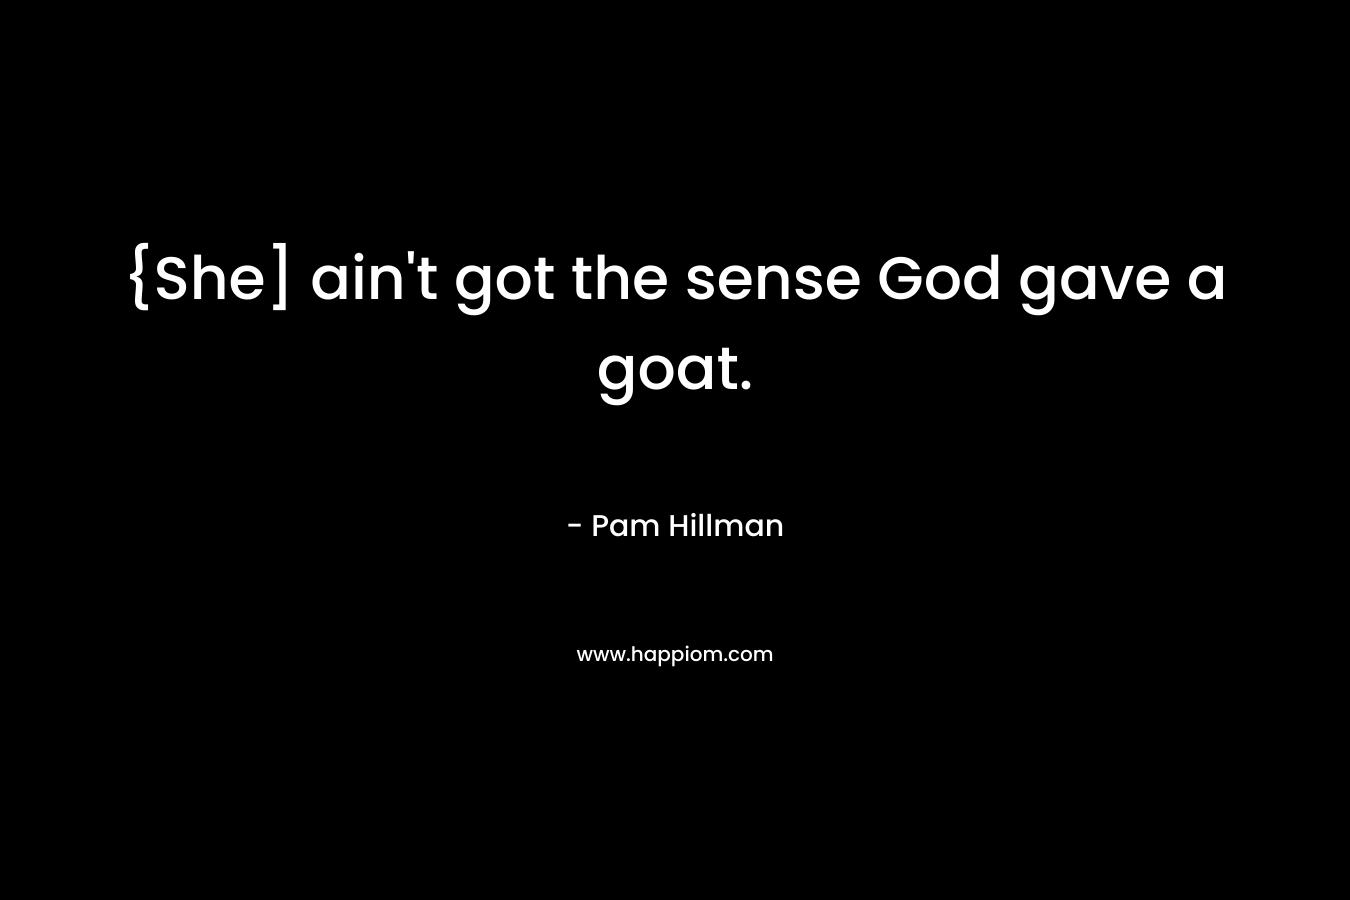 {She] ain't got the sense God gave a goat.